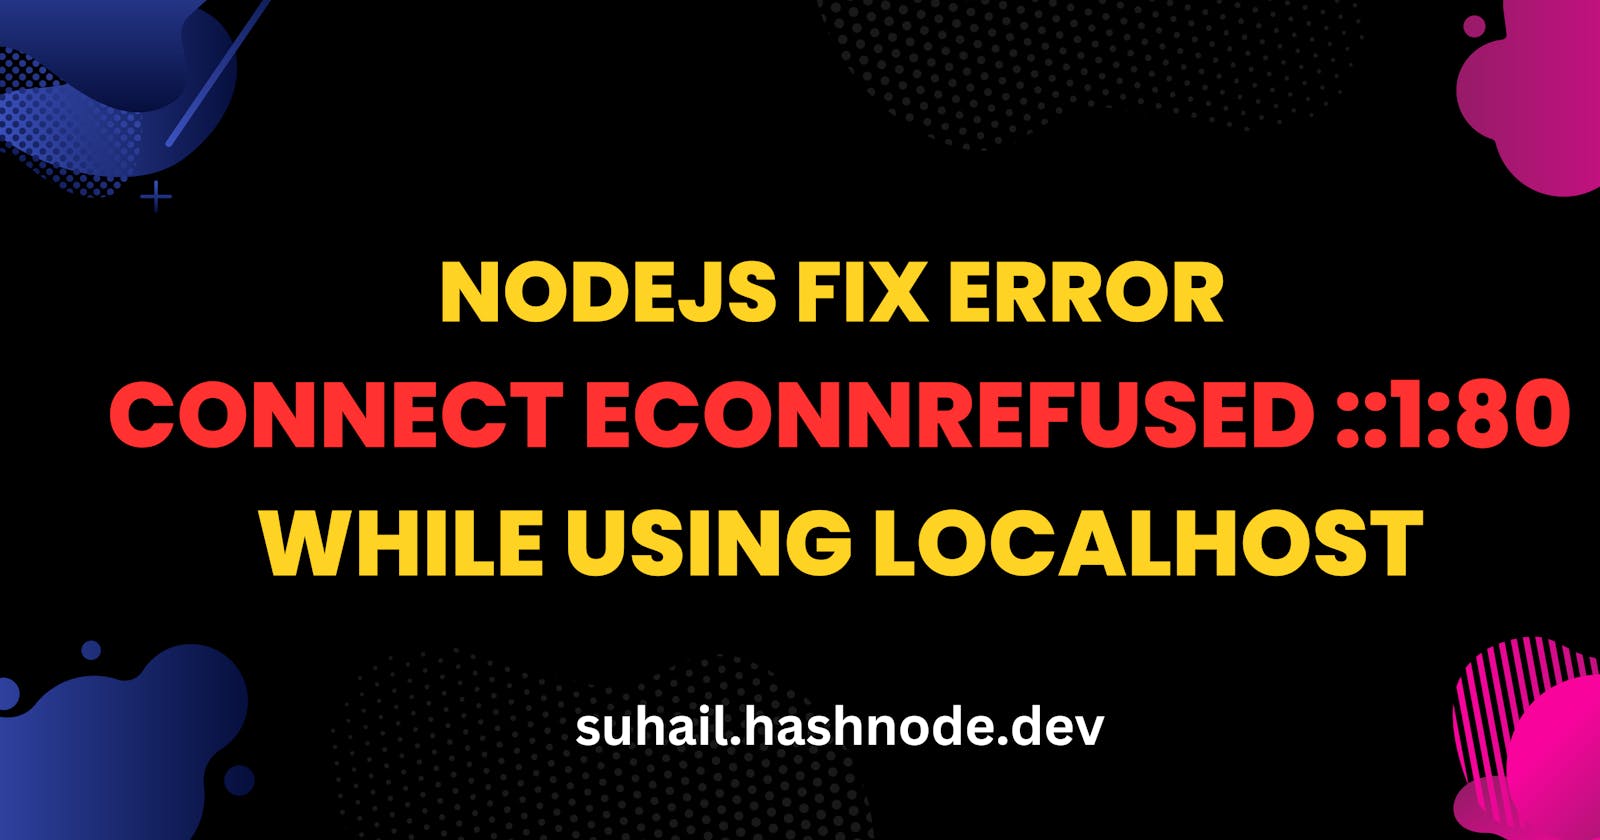 Nodejs Fix Error connect ECONNREFUSED ::1:80 while using localhost